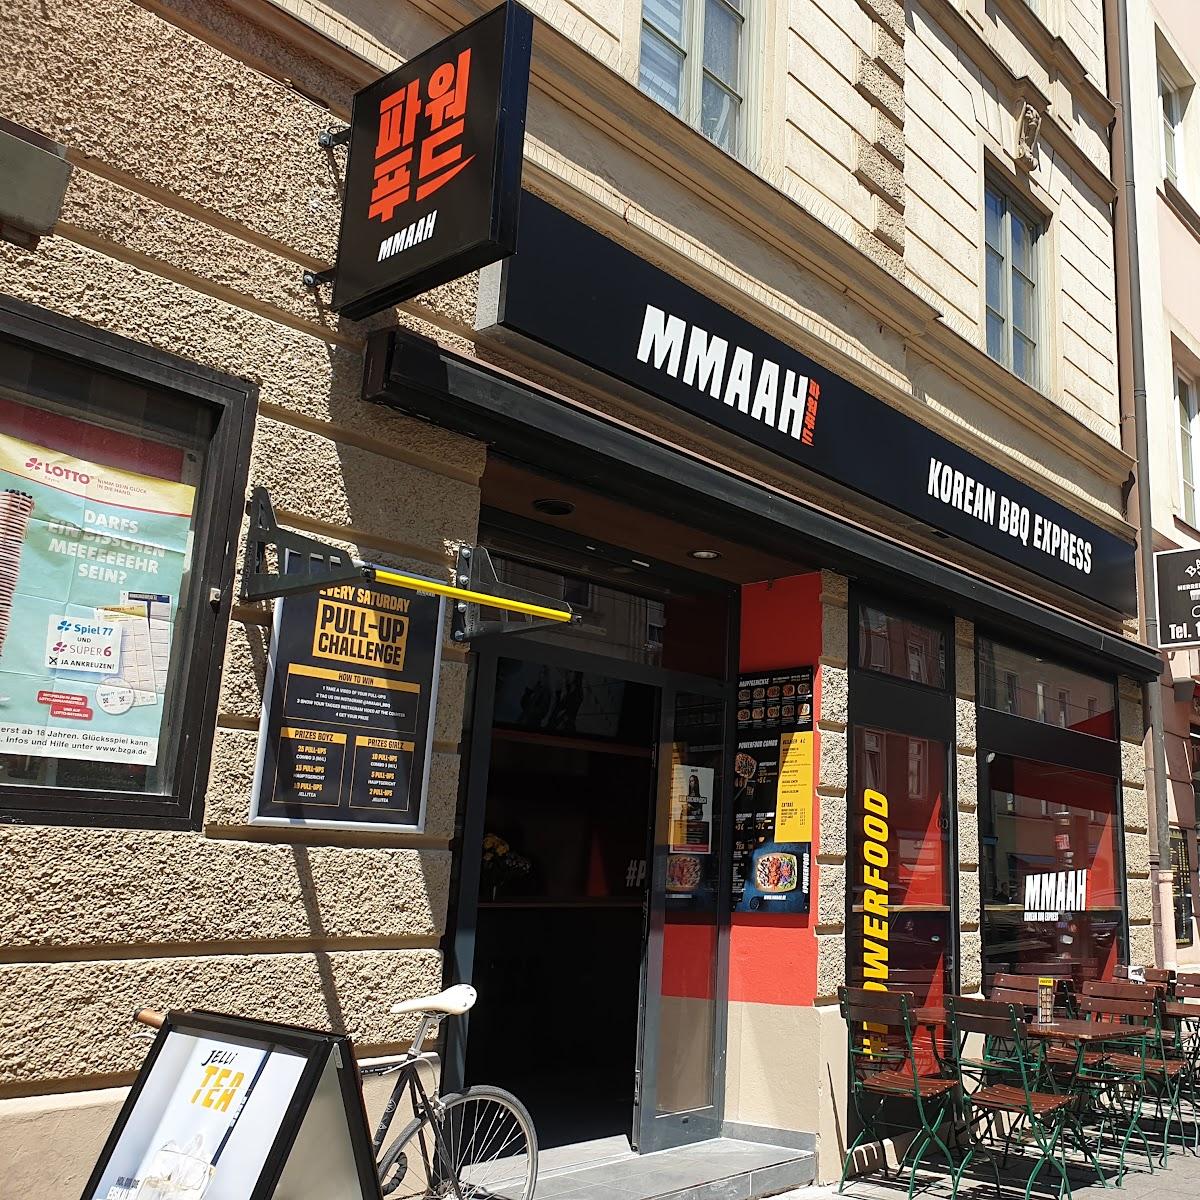 Mmaah - Korean BBQ Express Speisekarte 🍽️ München